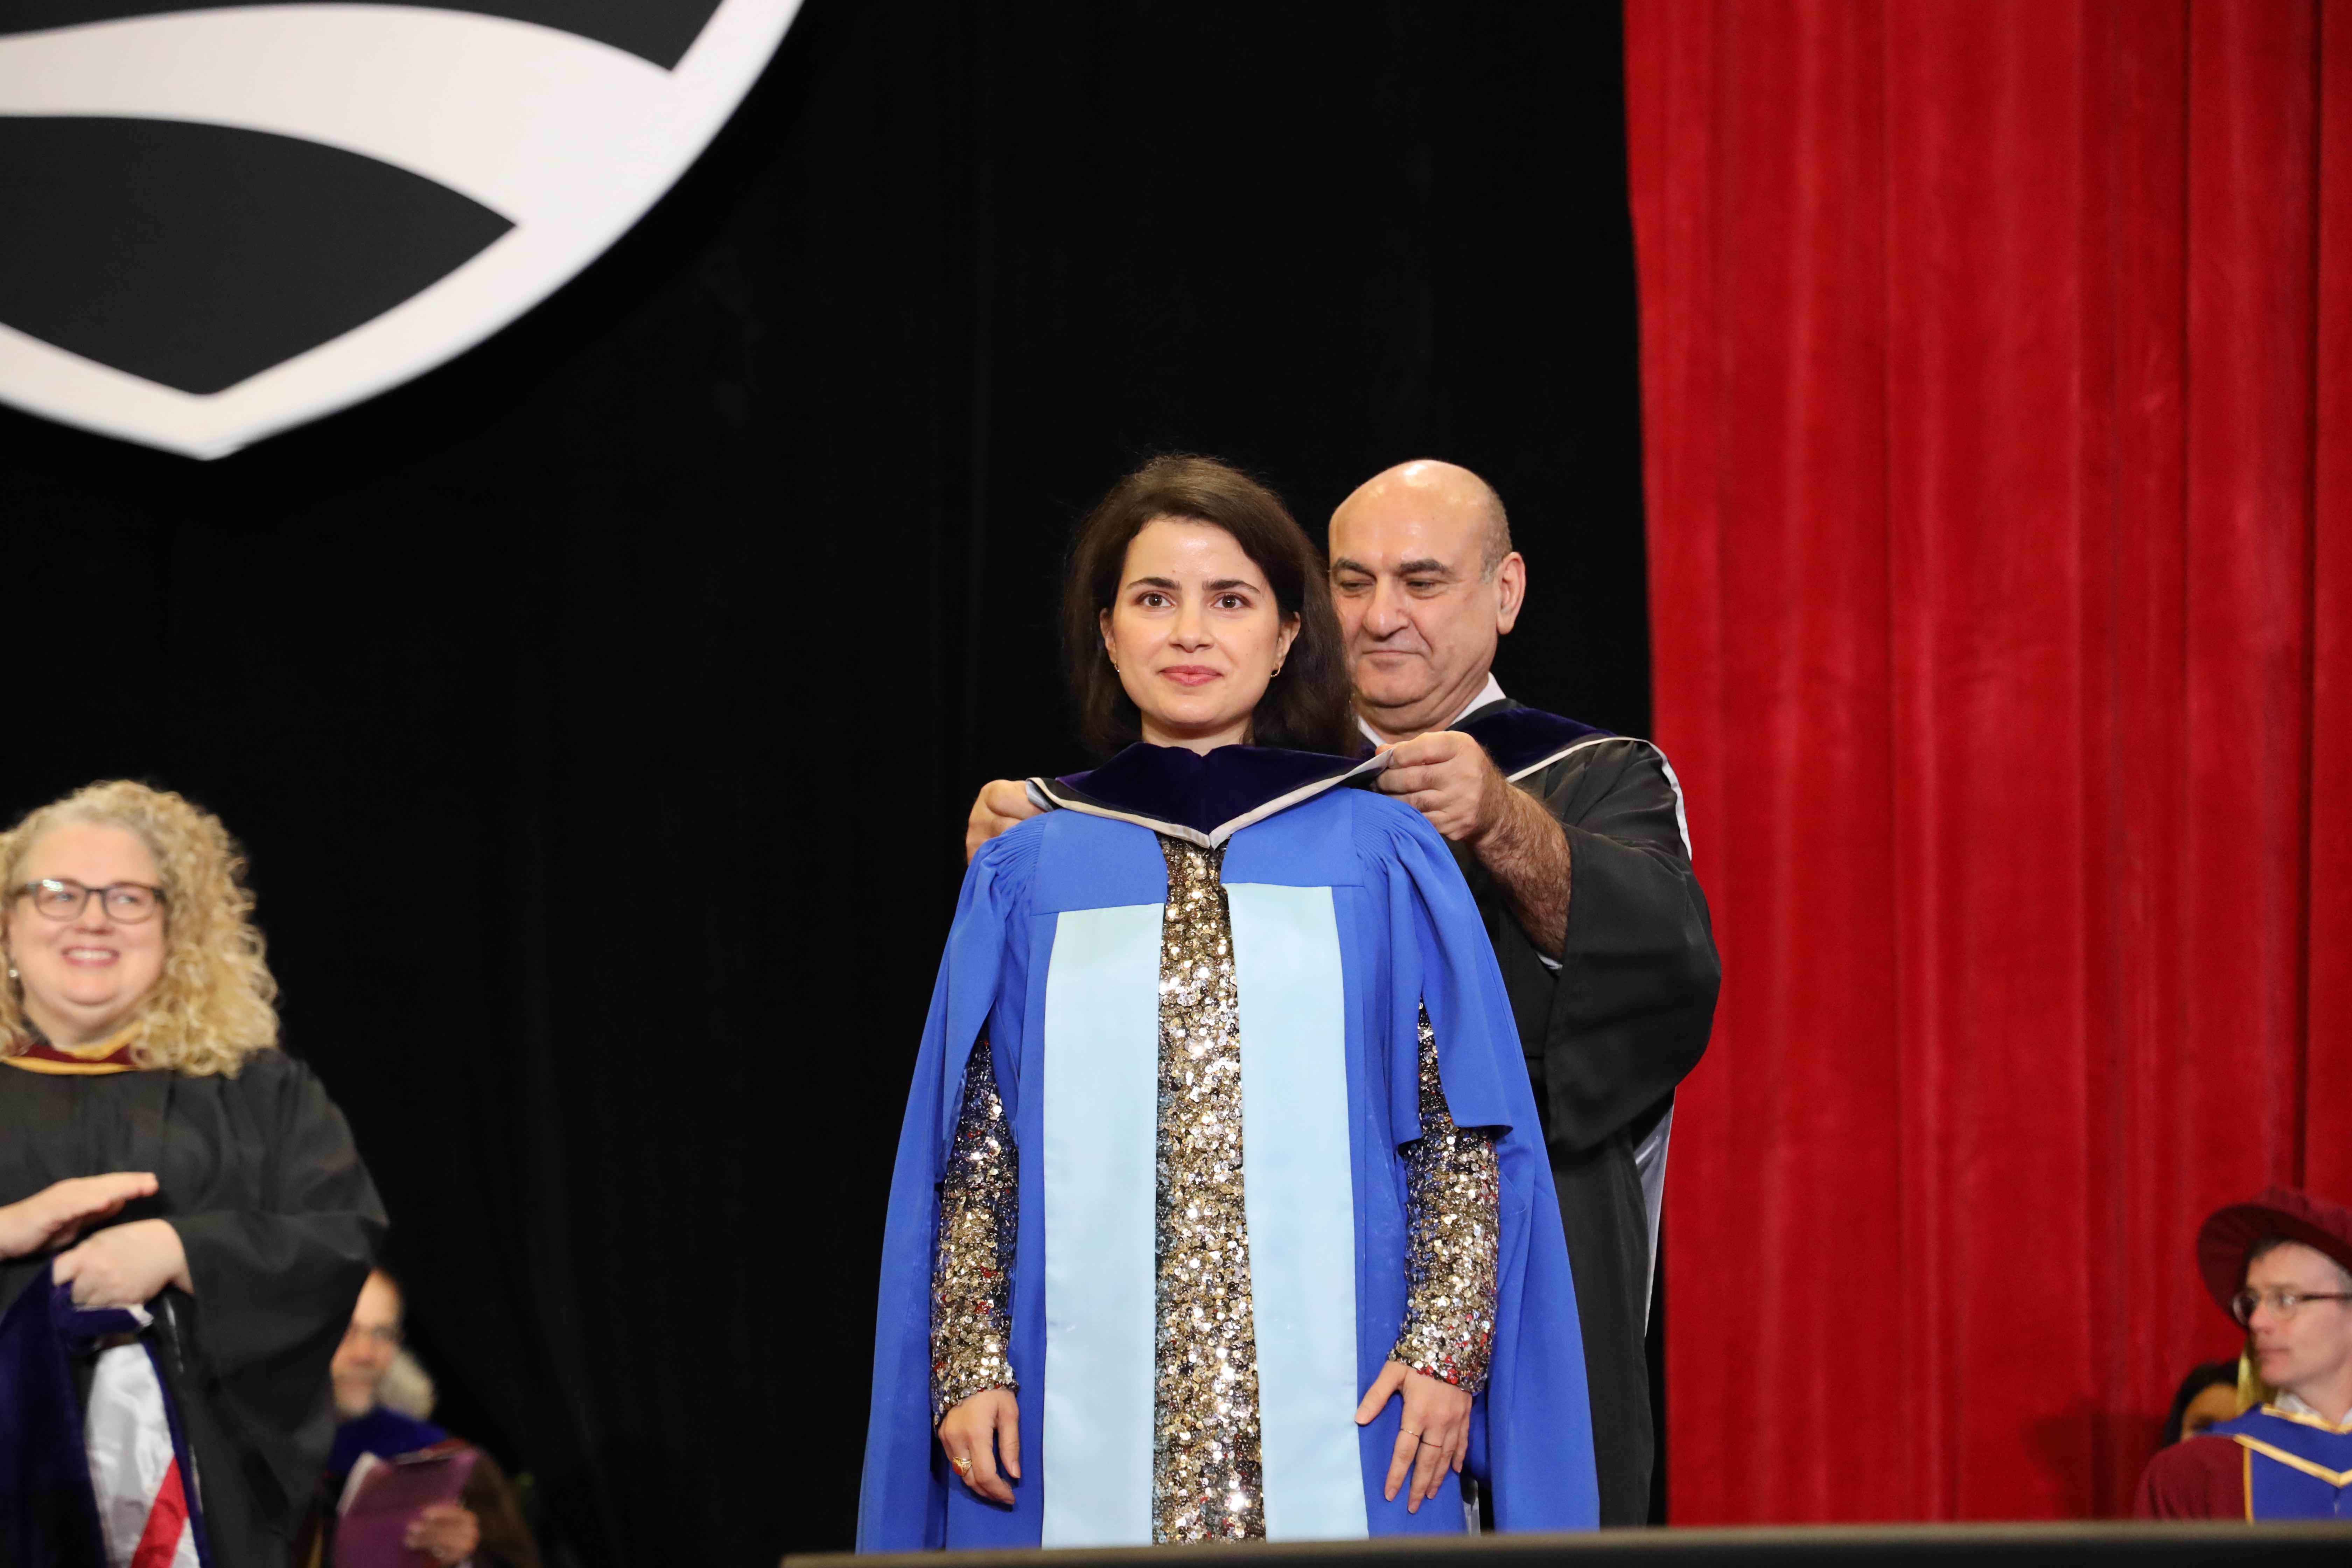 Fateme Hormozzade Ghalati on receiving a Senate Medal